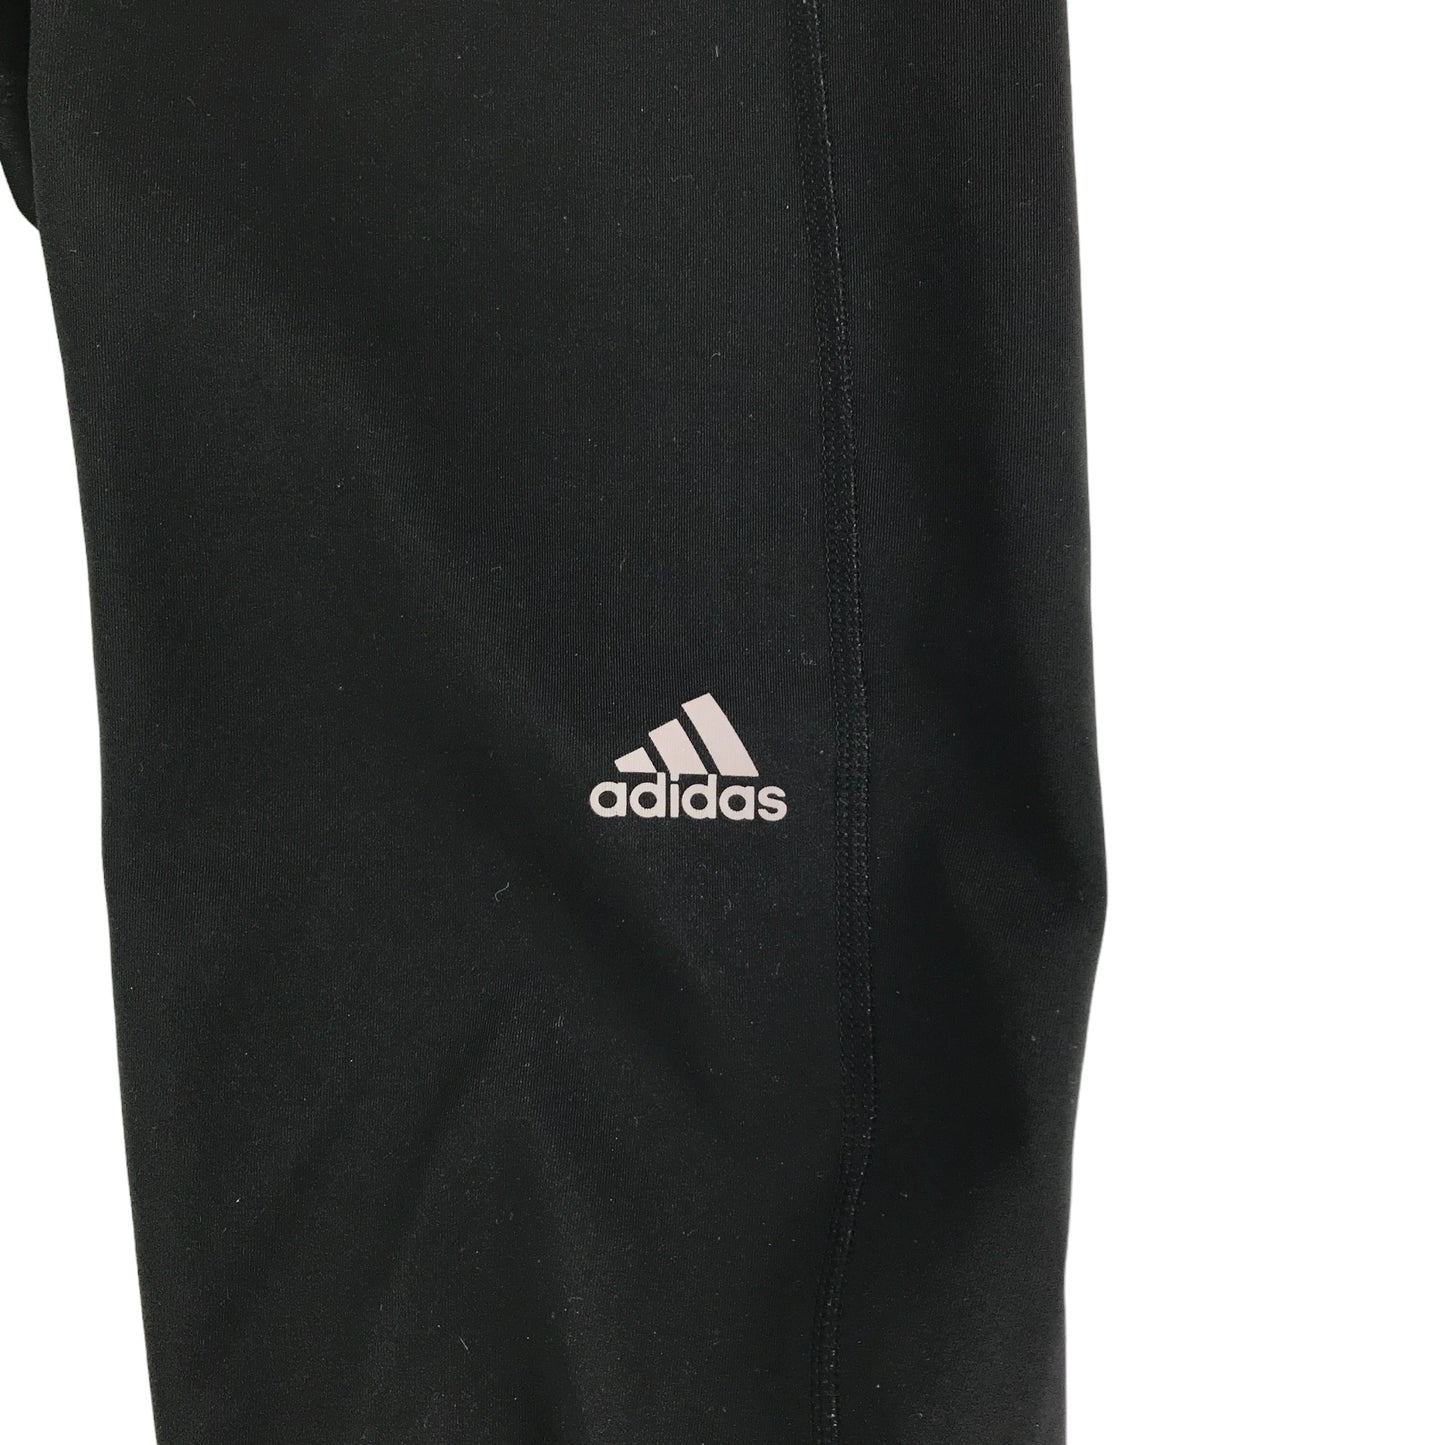 Adidas Response Sport Leggings Size Small Women's 8-10 Black Blue 3/4 legs